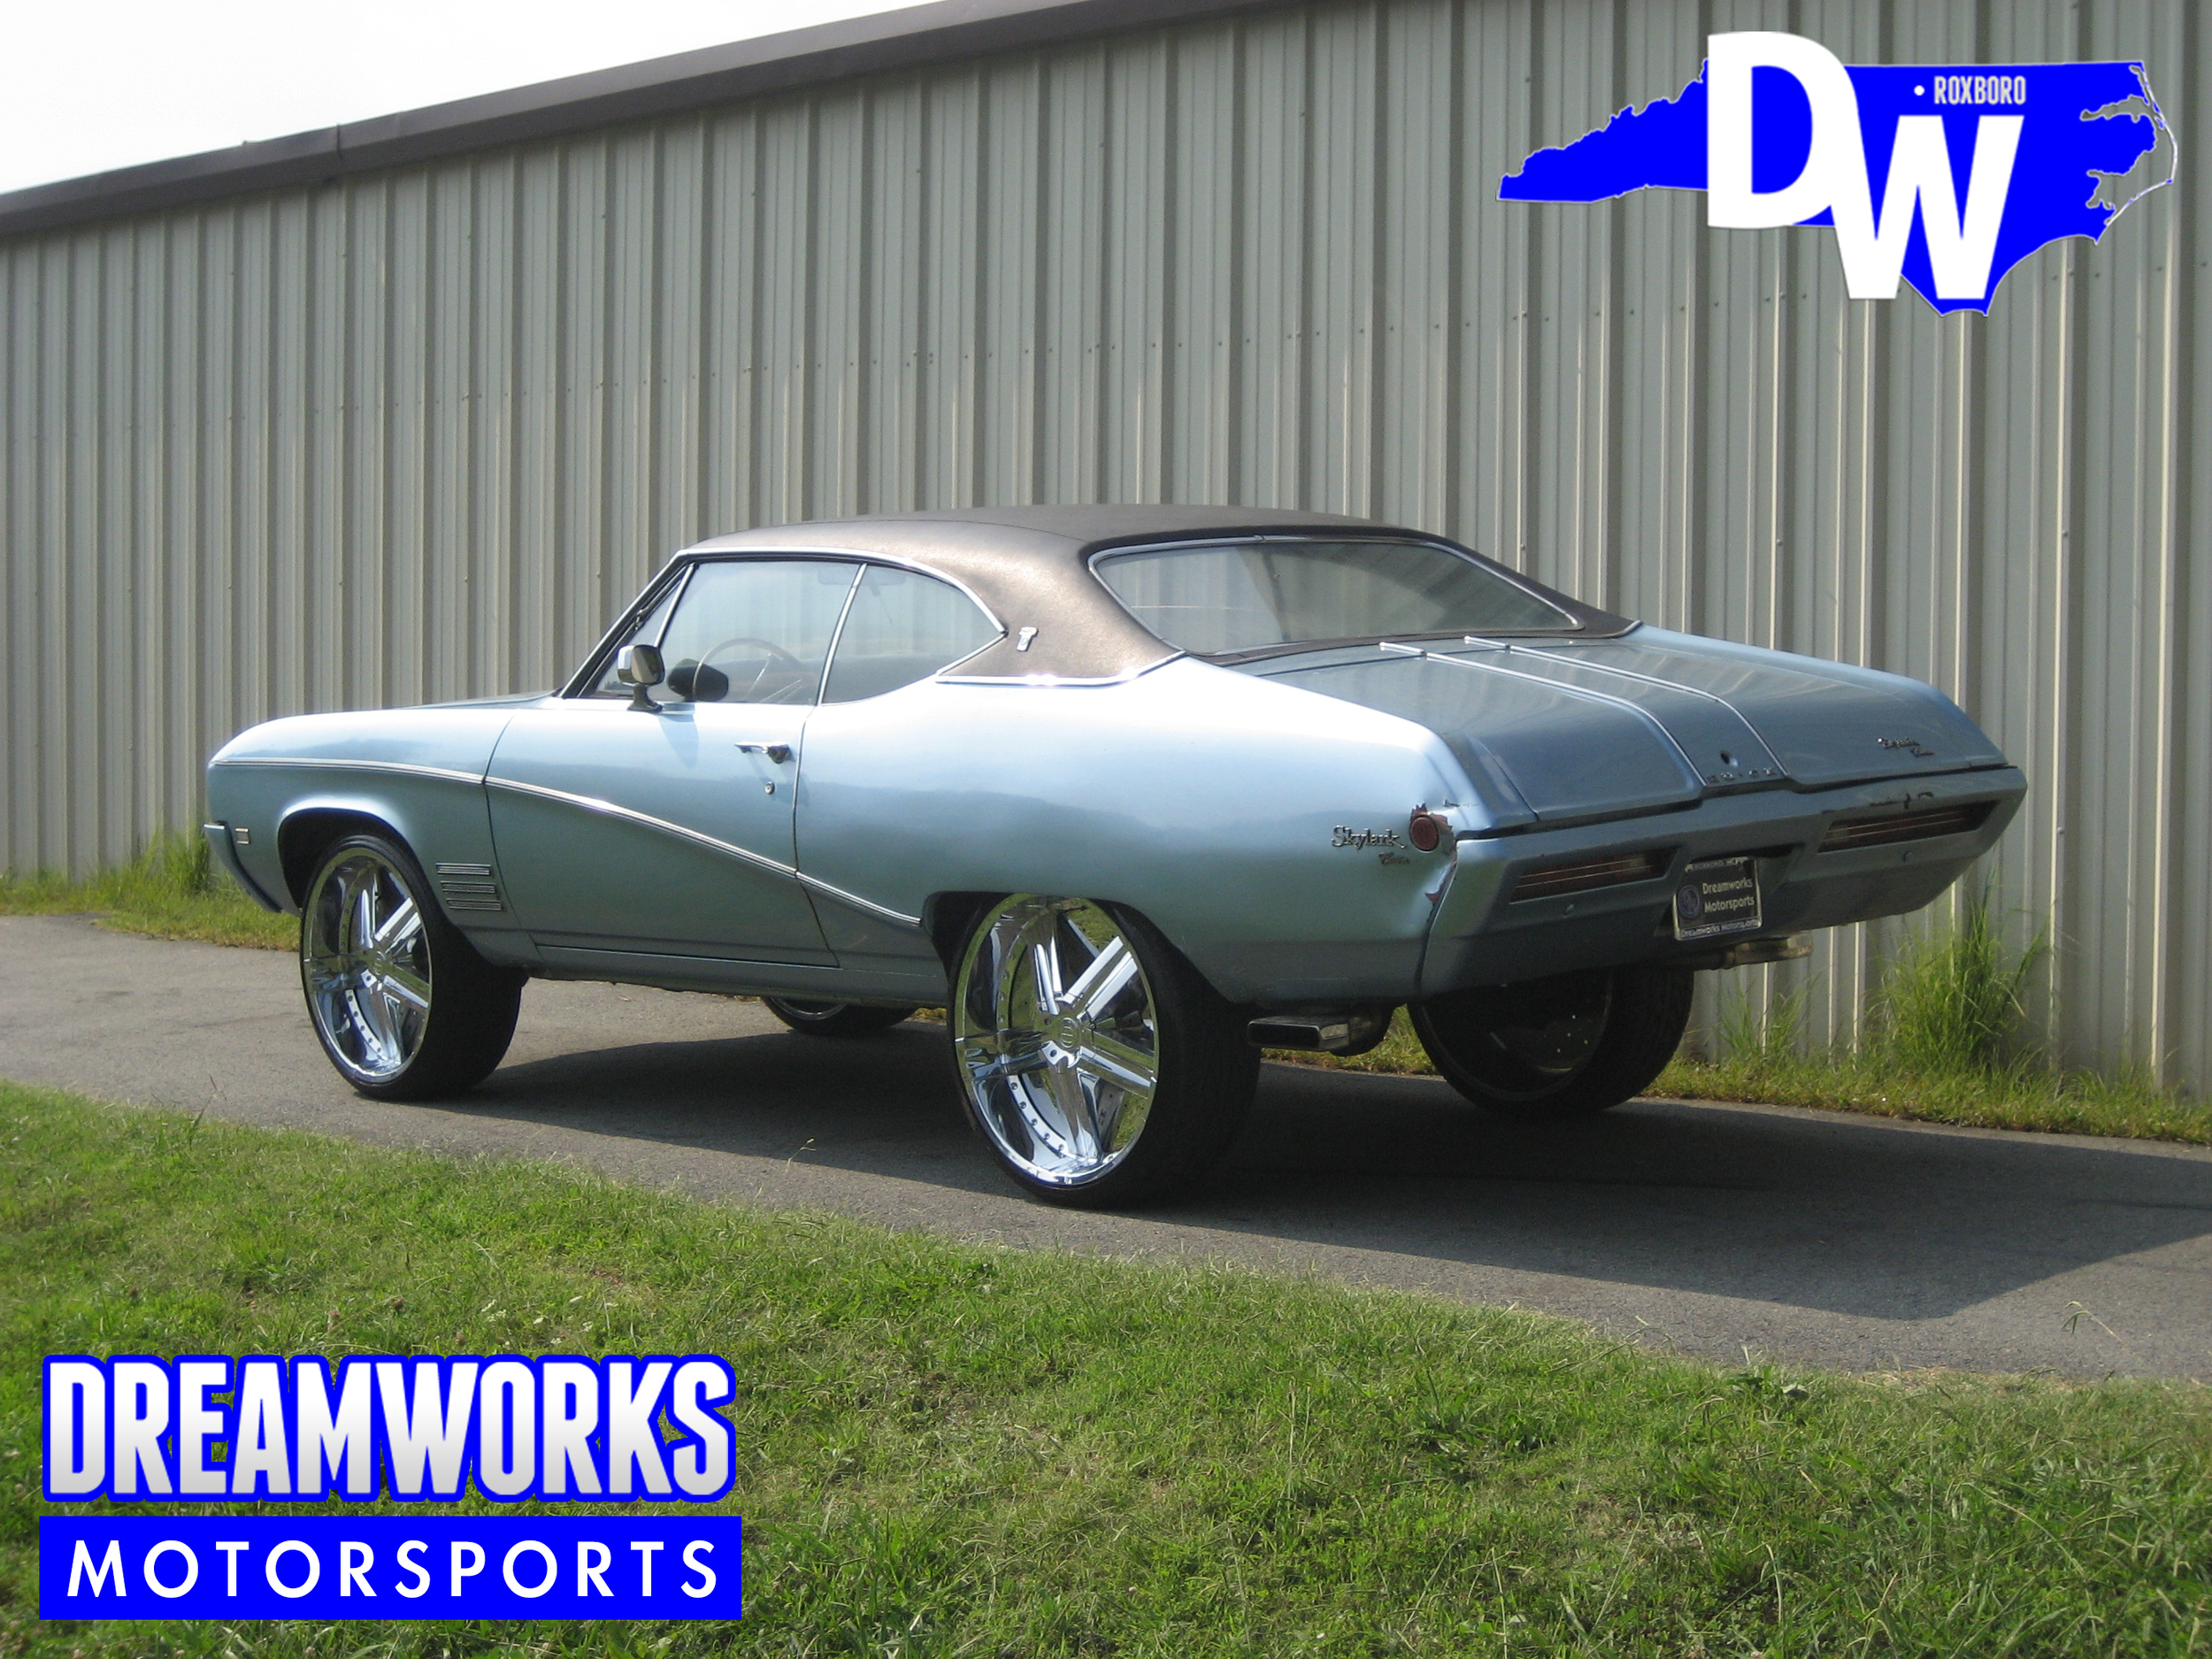 68-Buick-Skylark-Dreamworks-Motorsports-2.jpg